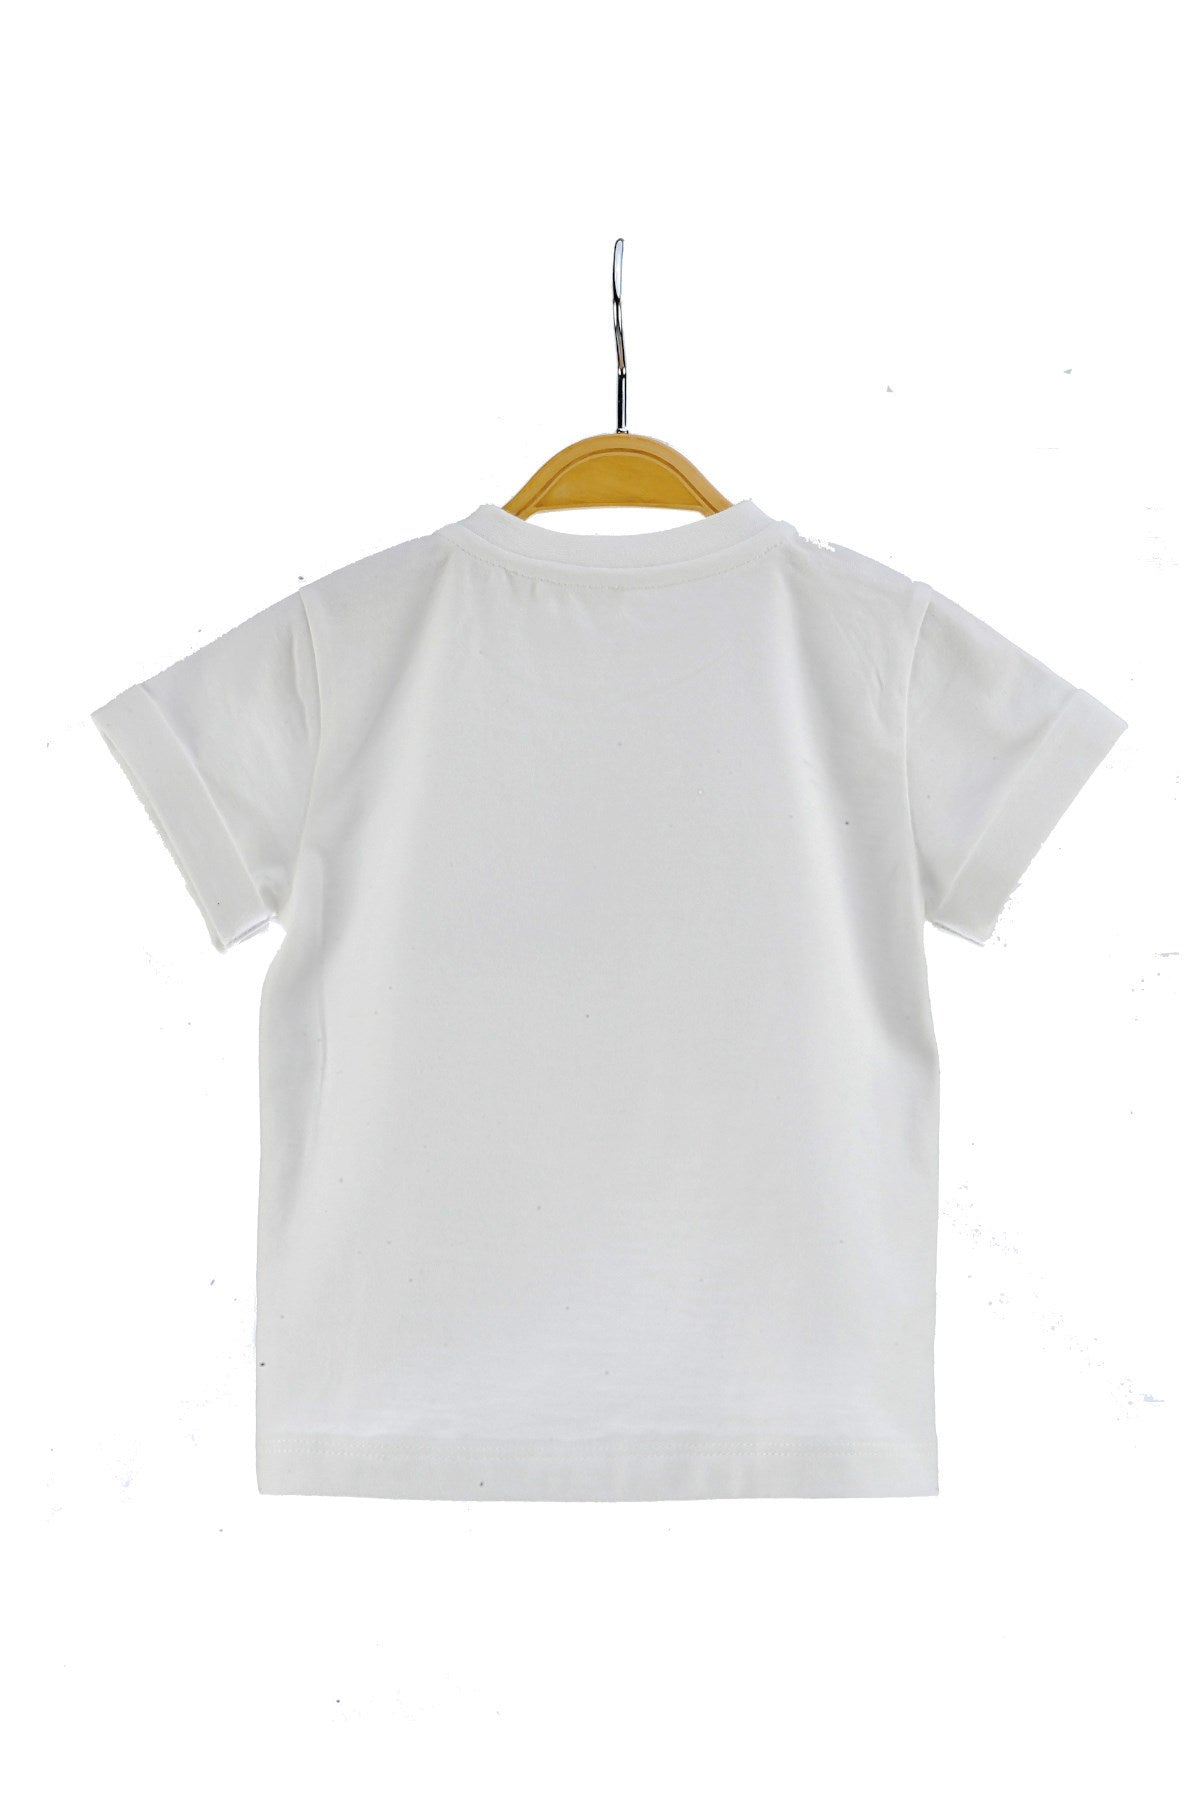 Erkek Bebek Beyaz Nakışlı T-Shirt (6ay-4yaş)-2